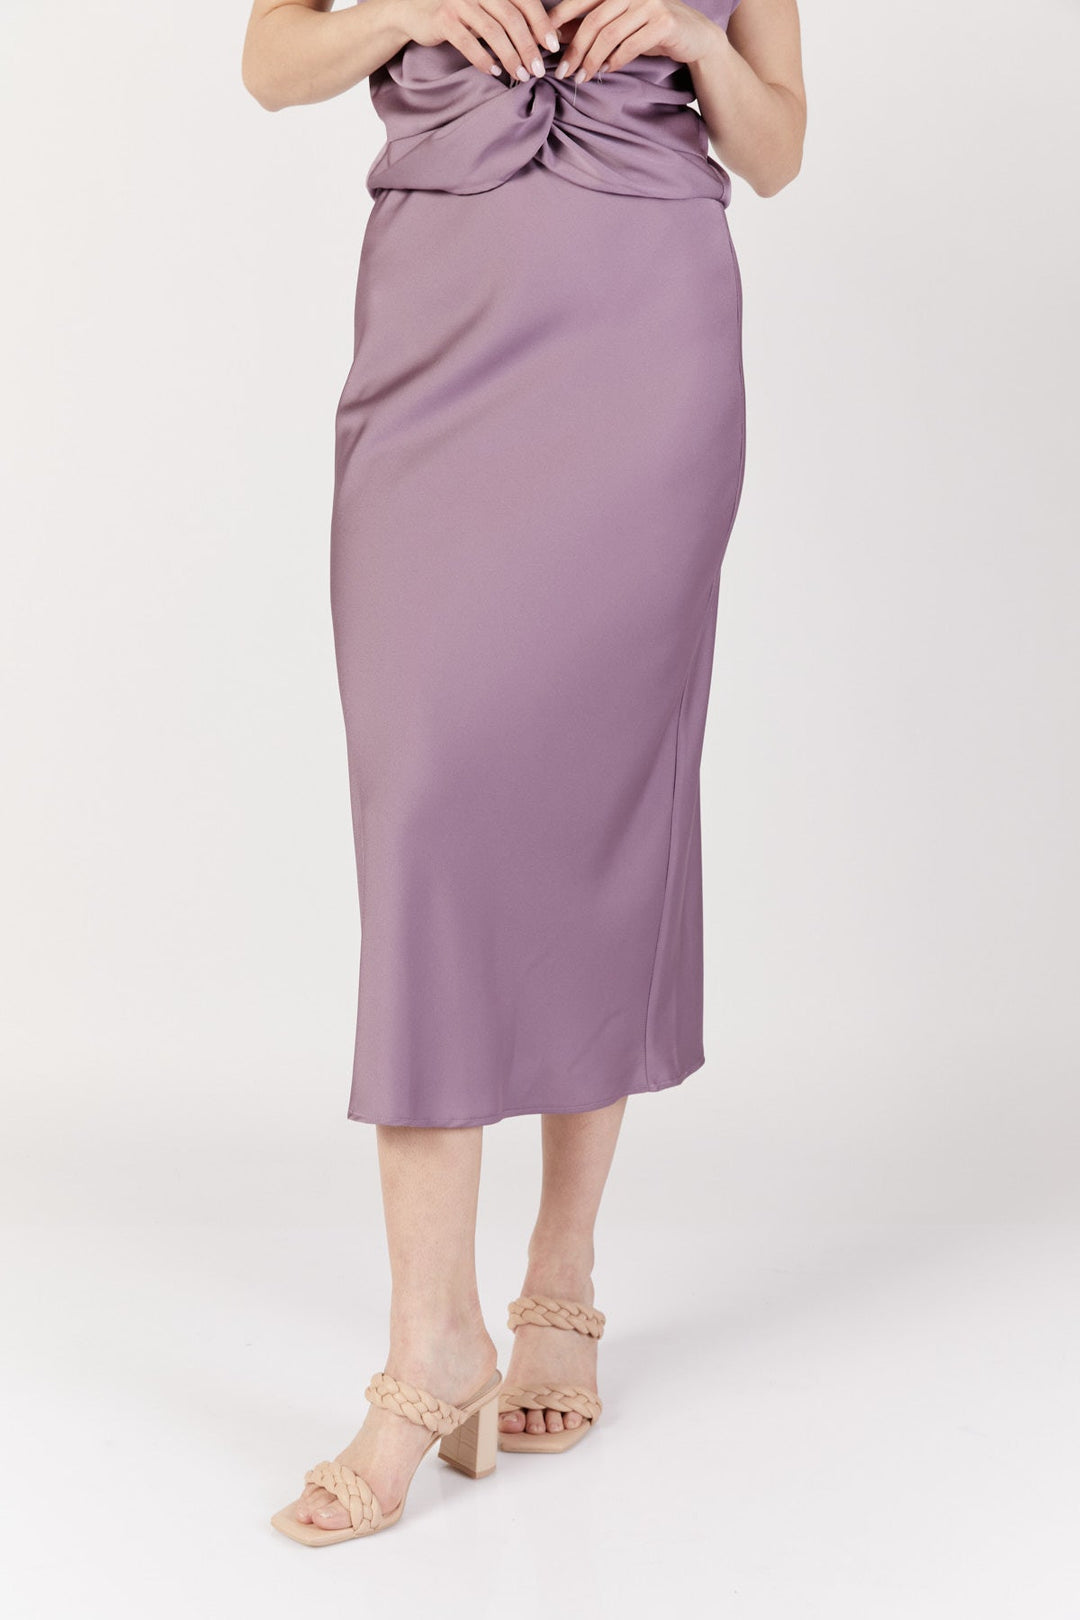 חצאית מידי עדן בצבע סגול - M By Maskit